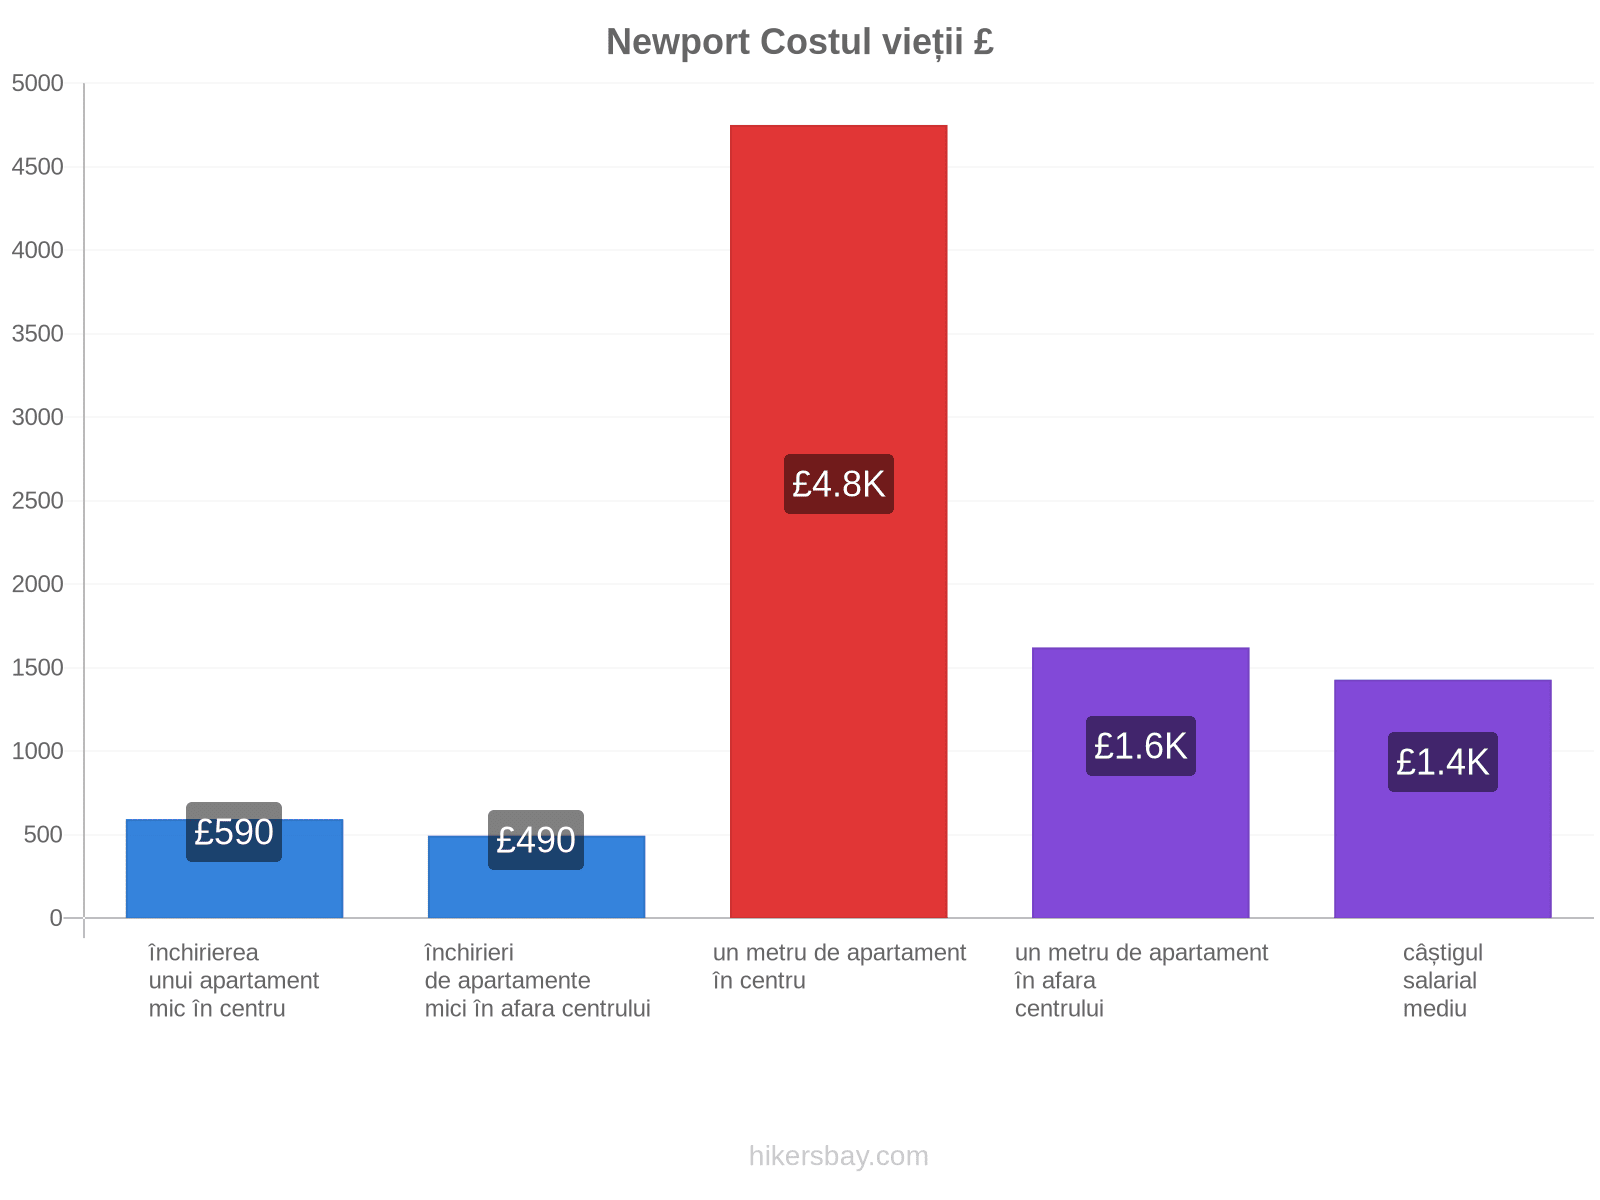 Newport costul vieții hikersbay.com